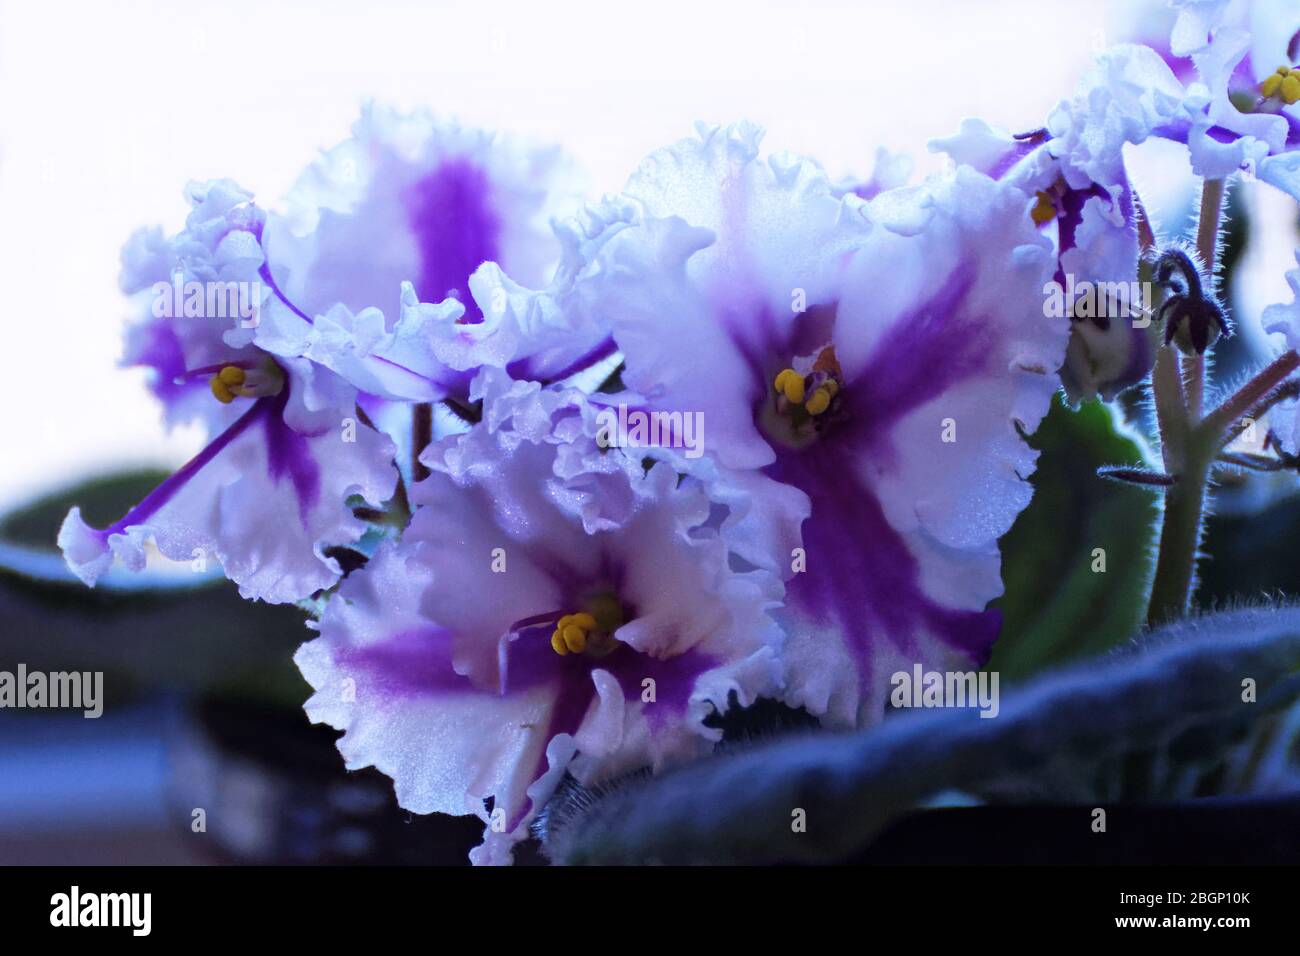 Photo flowers, violets, bouquet, gift, congratulation, Stock Photo